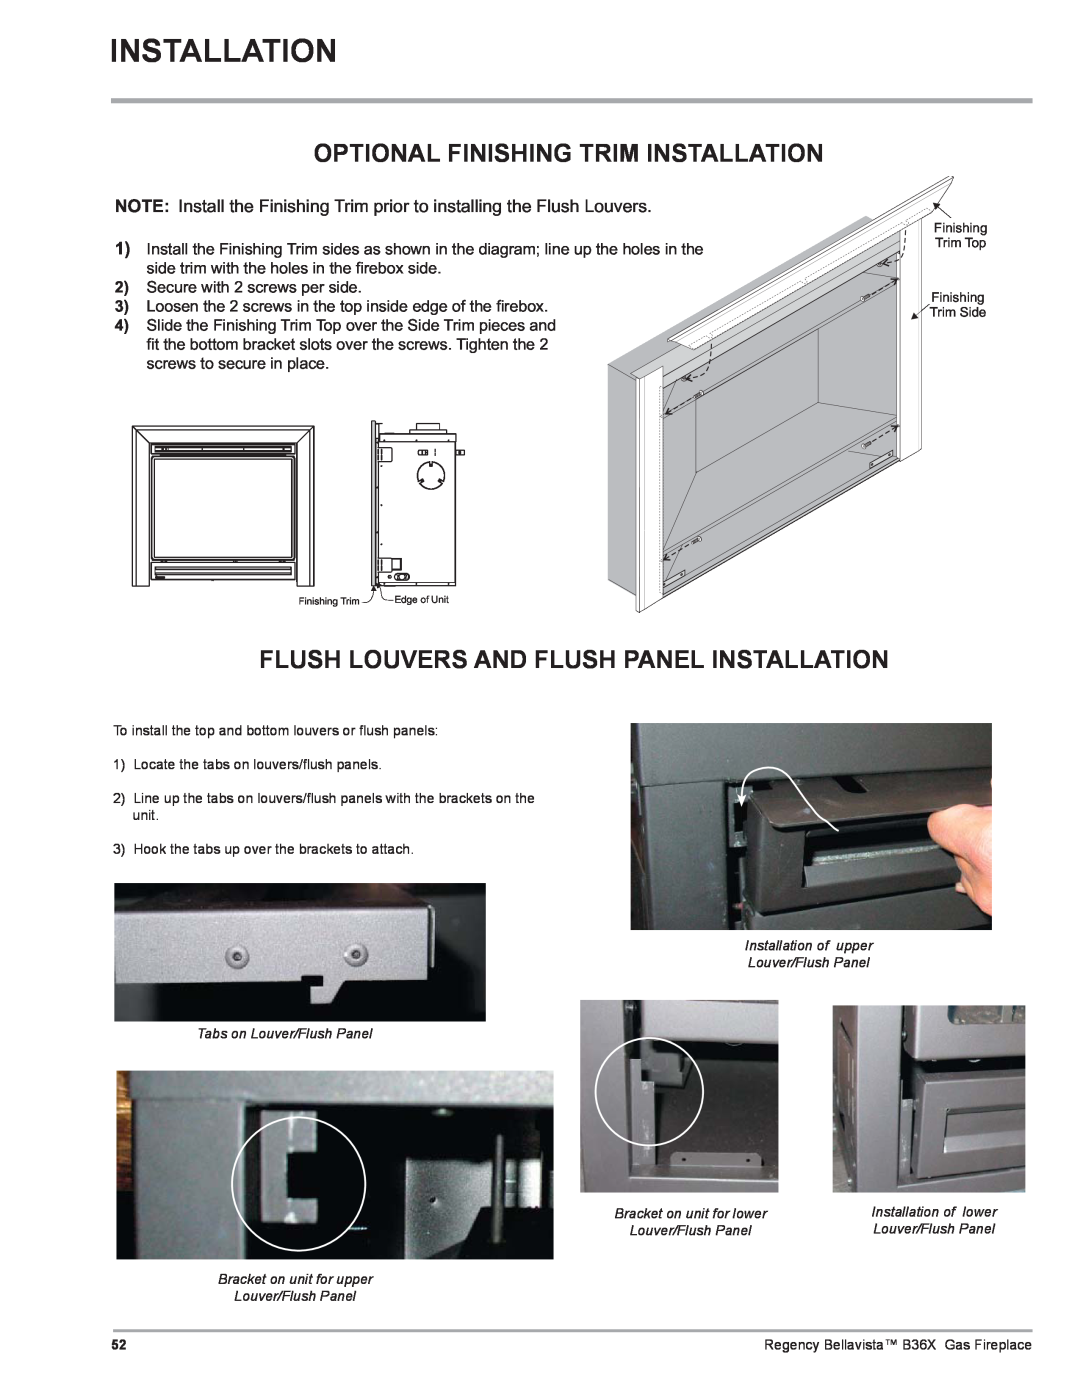 Regency B36X installation manual Optional Finishing Trim Installation, Flush Louvers And Flush Panel Installation 